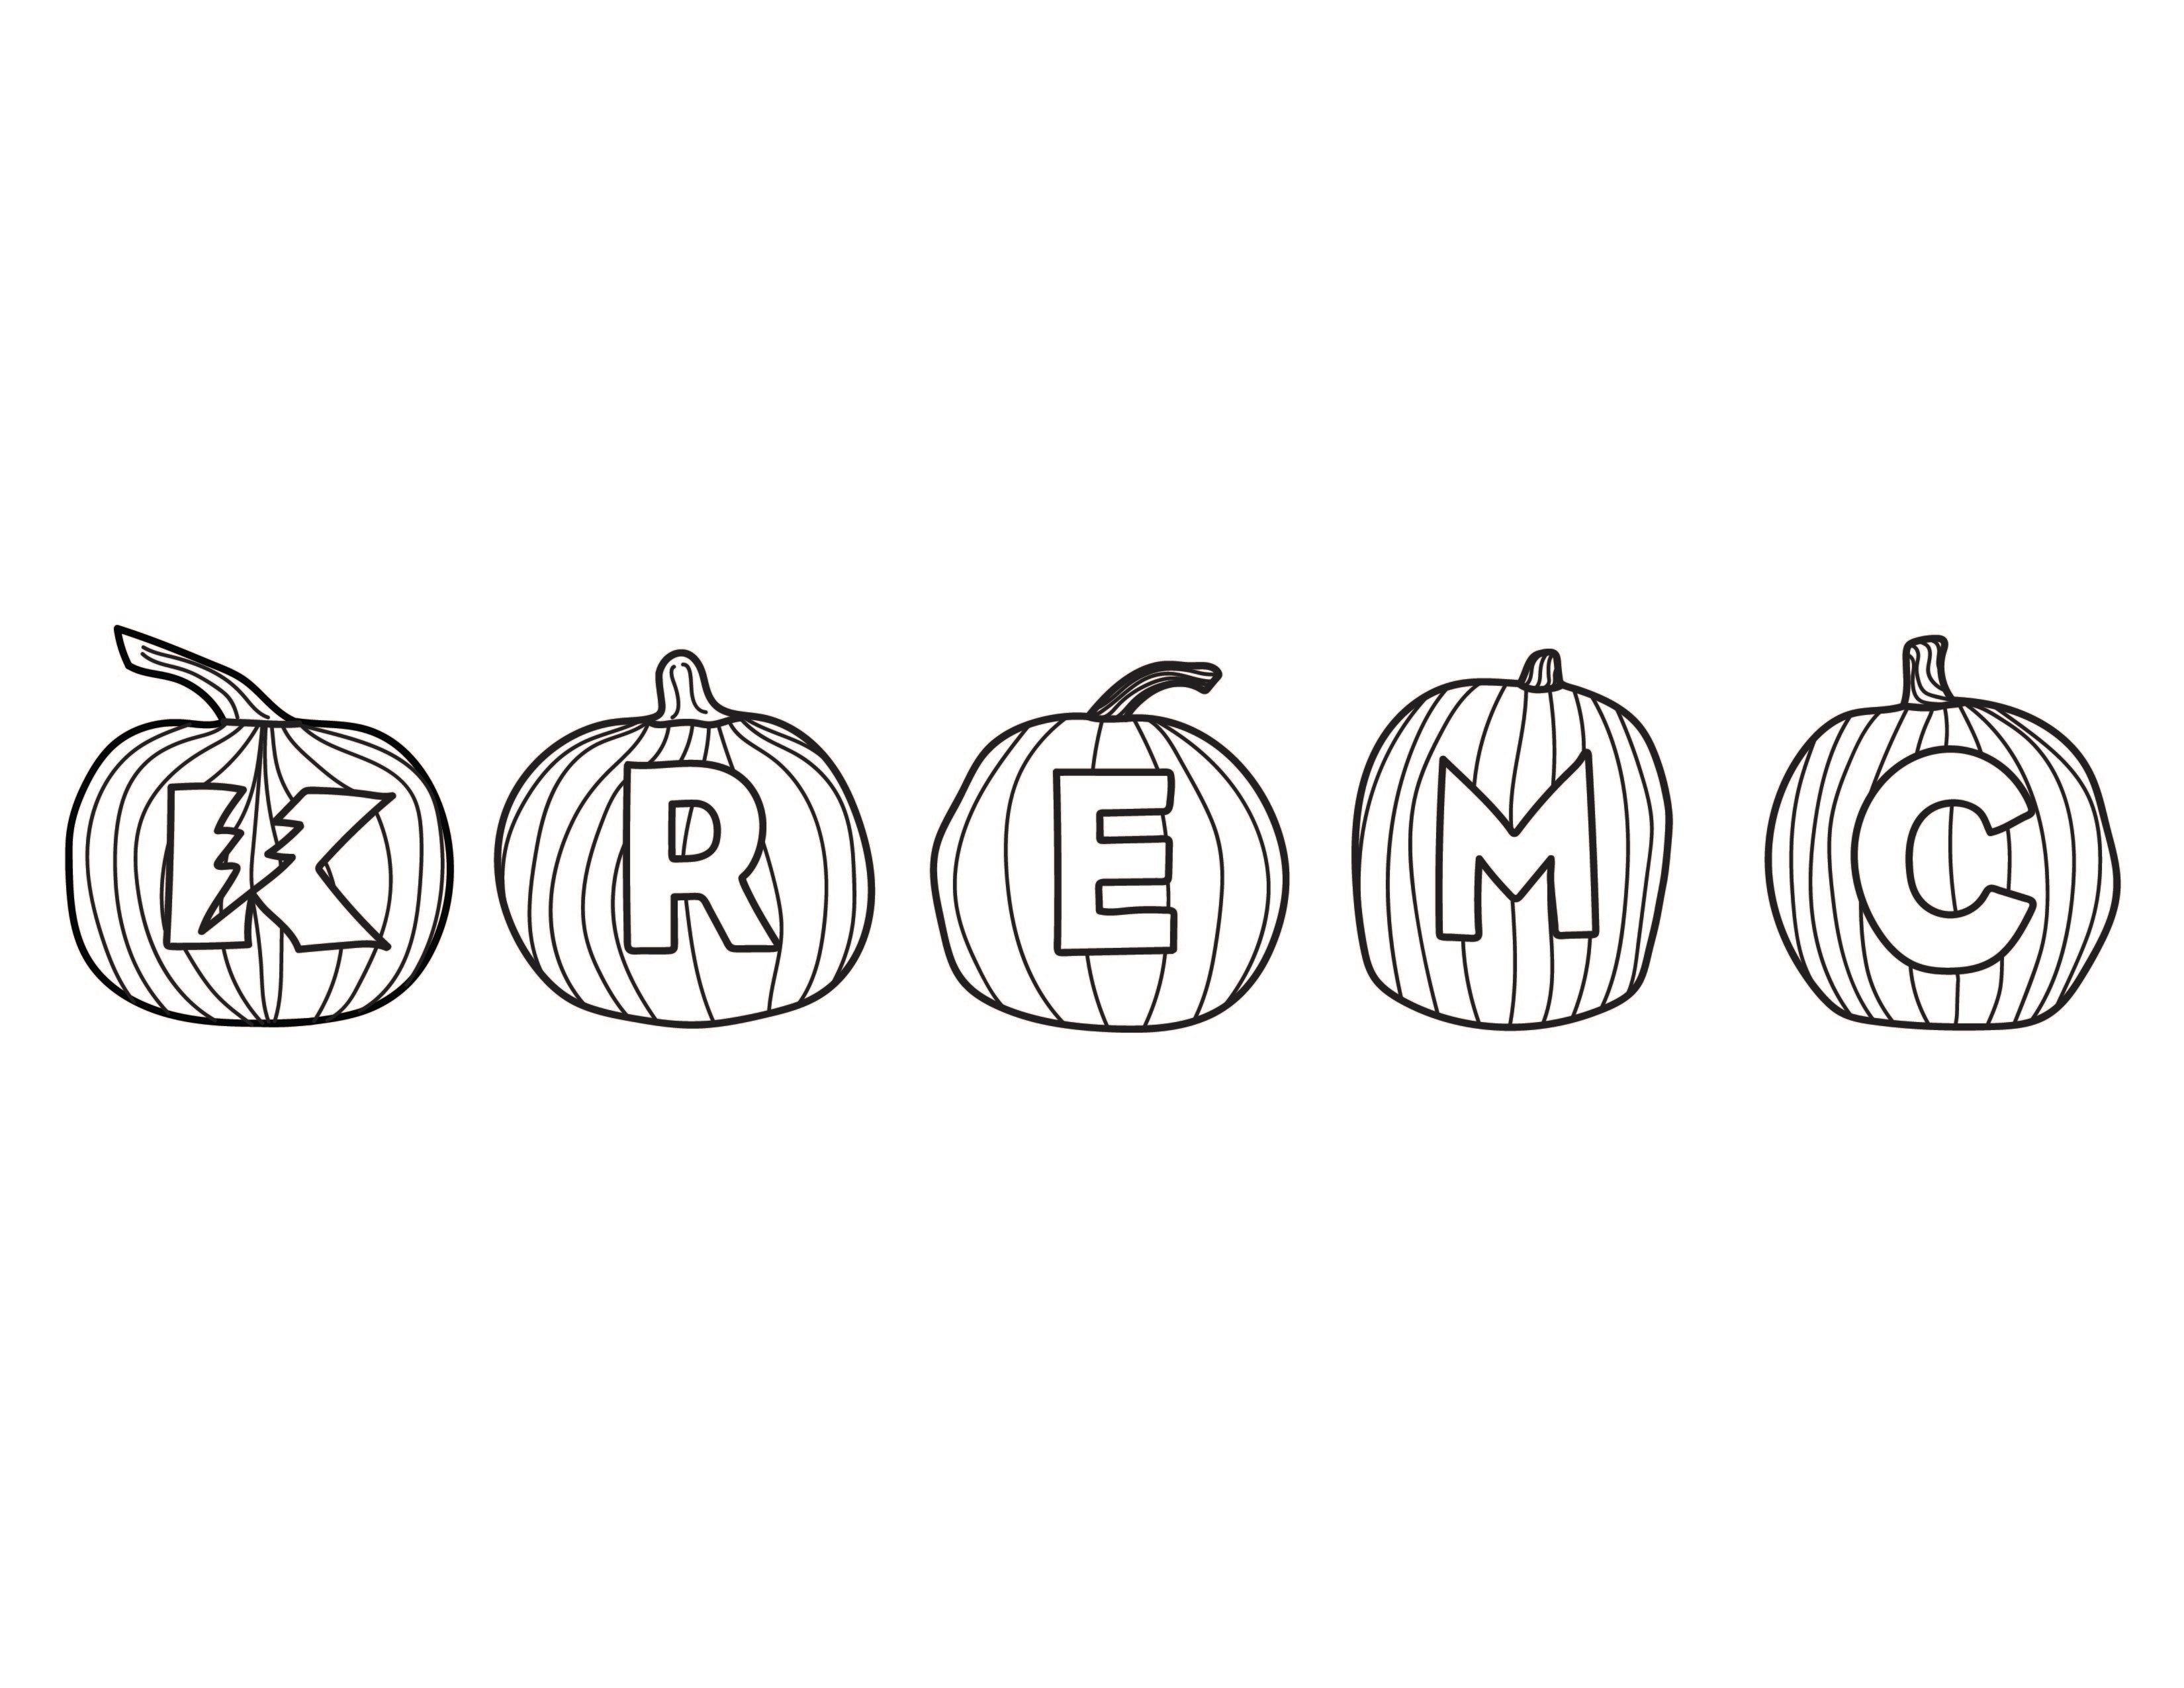 KREMC Pumpkin Coloring Page